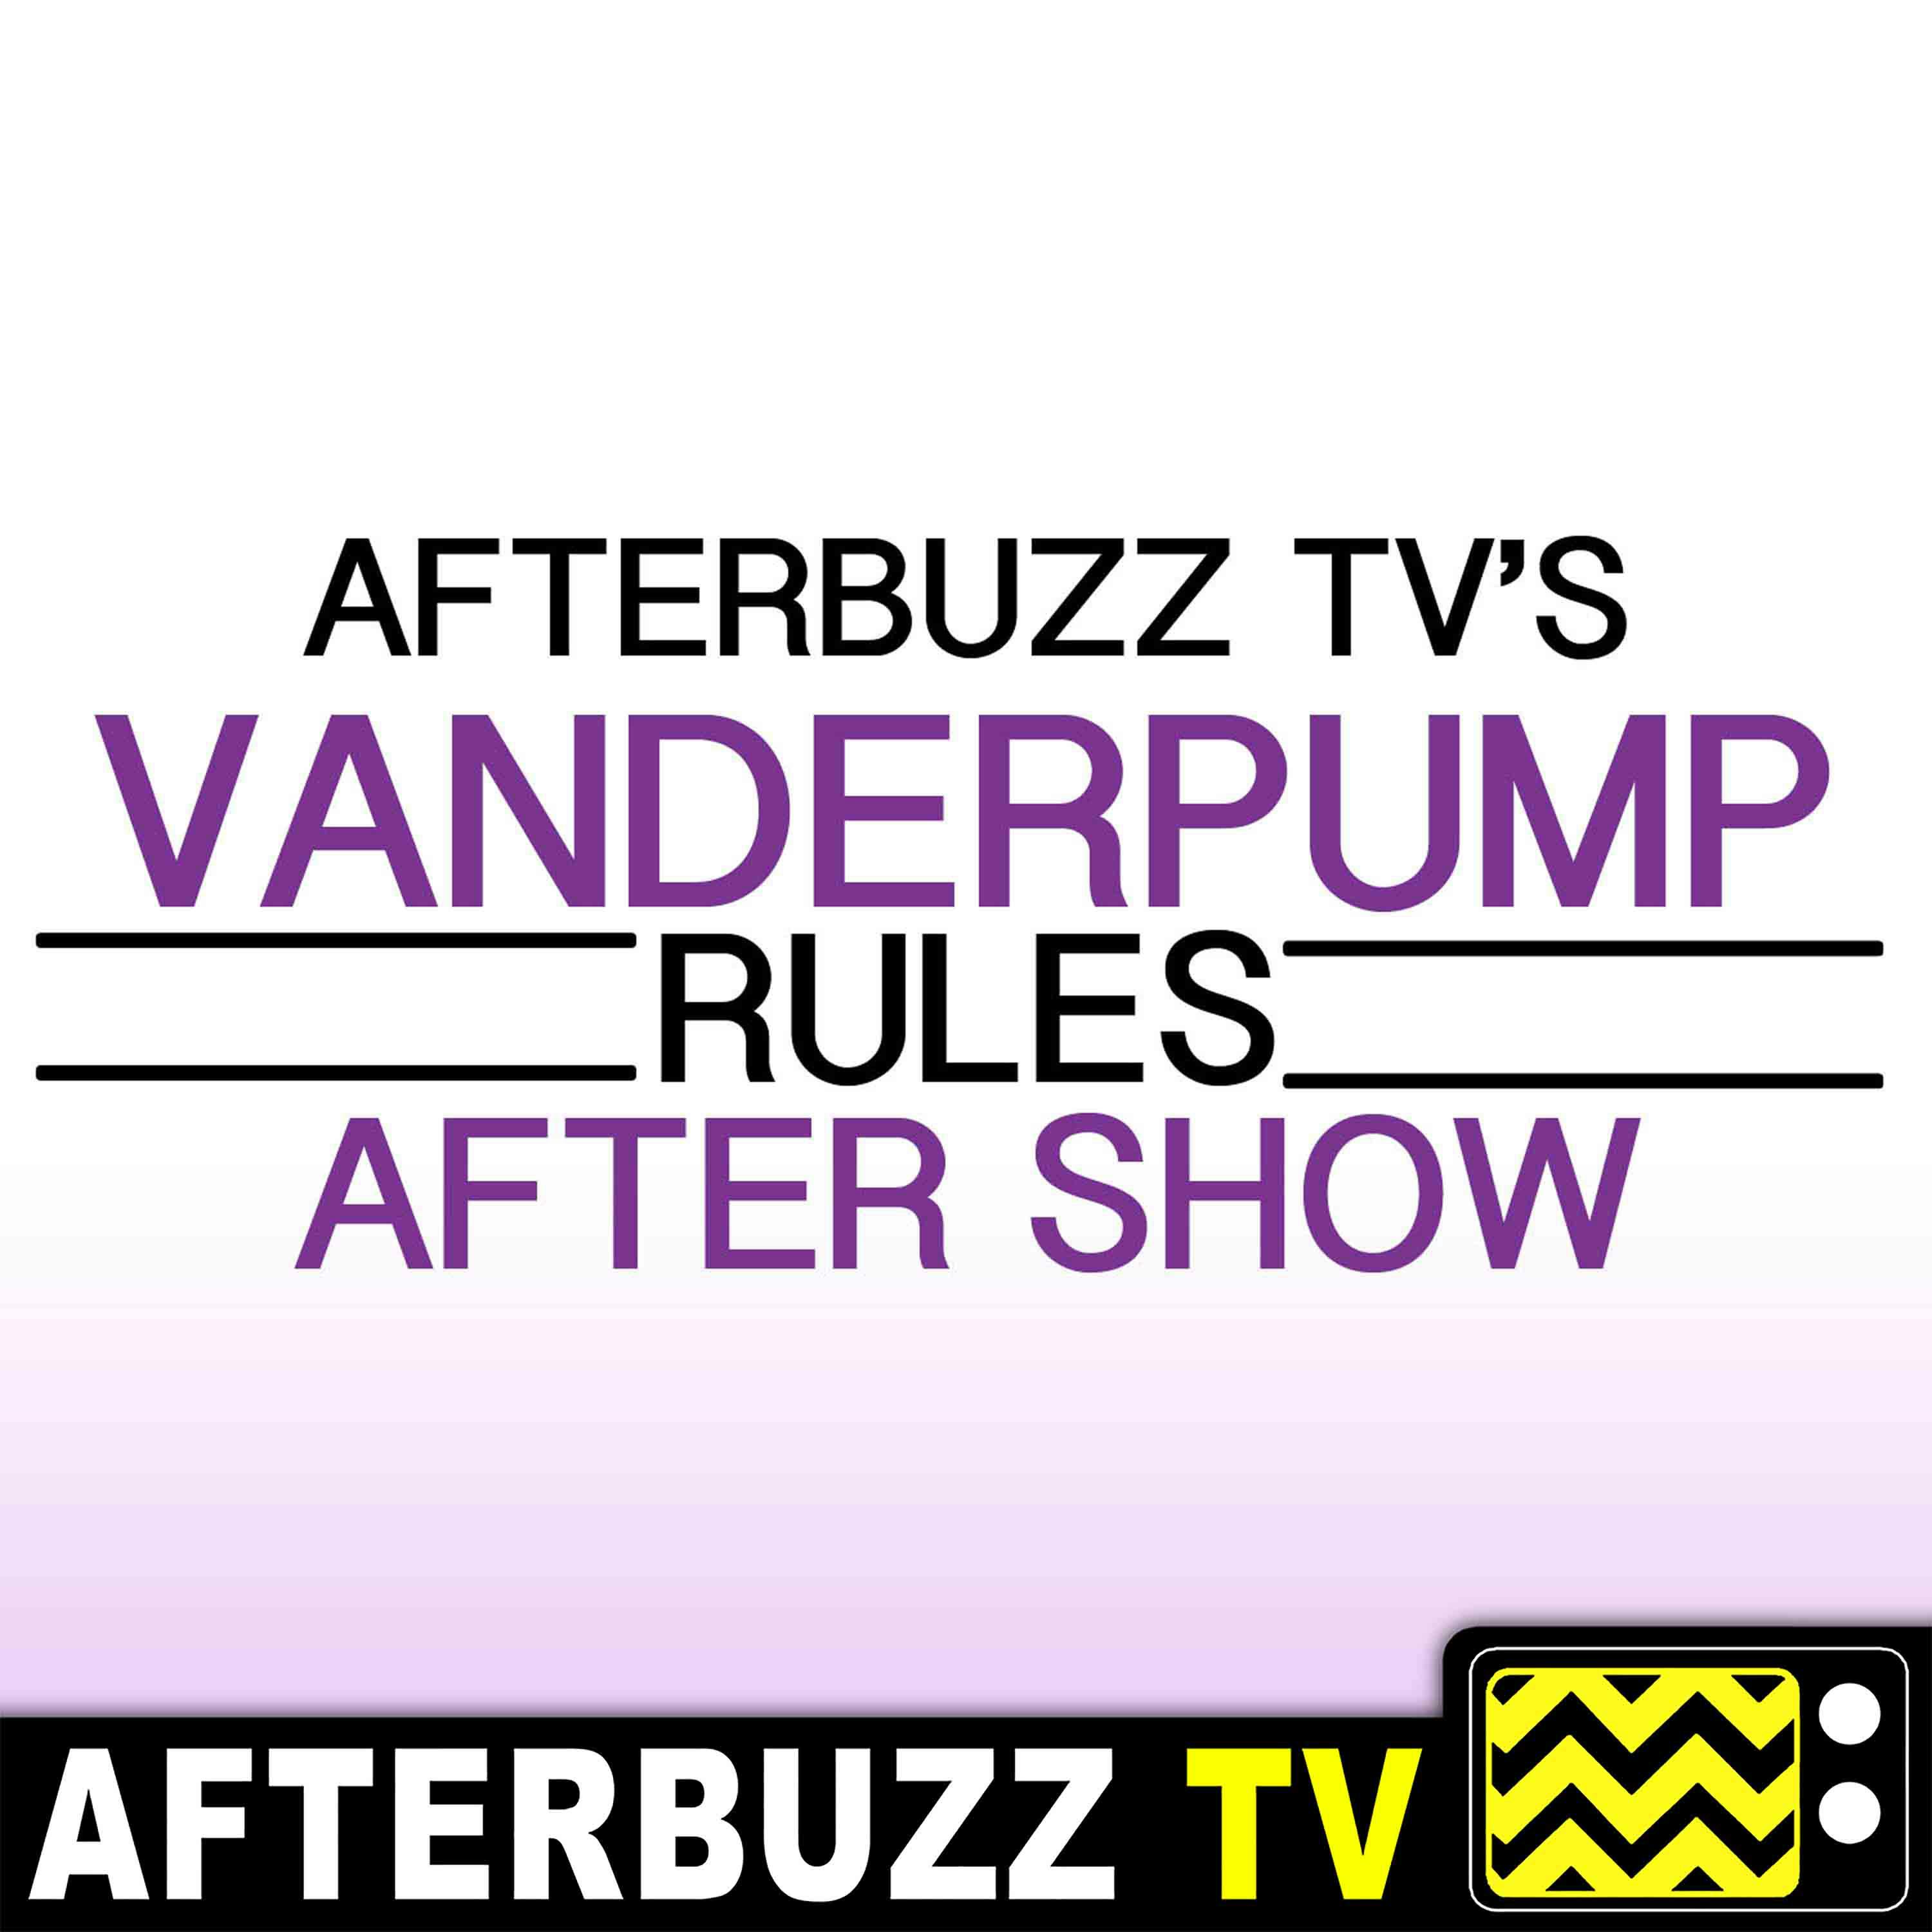 "Training Days" Season 8 Episode 2 'Vanderpump Rules' Recap & Review